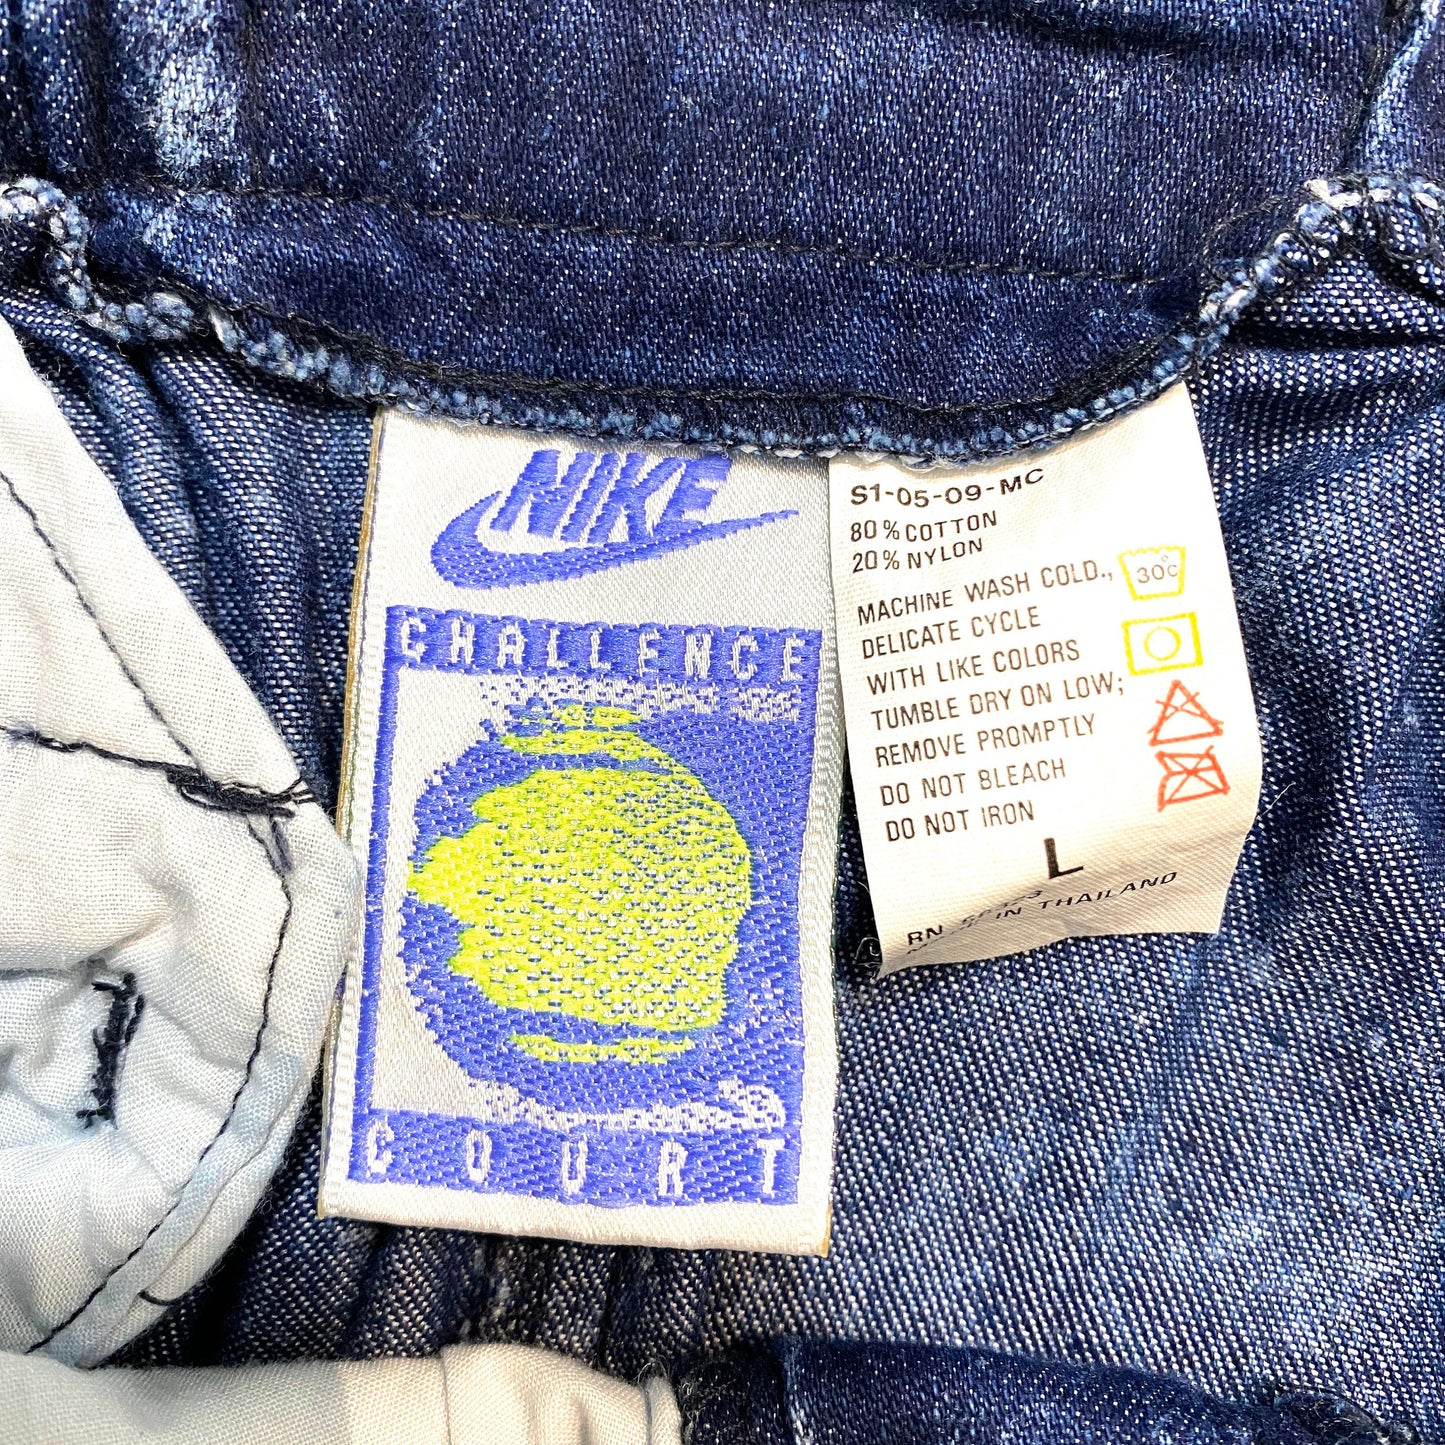 Nike Challenge Court Agassi ladies tennis acid wash denim skirt, 90s NOS w/tags sz L